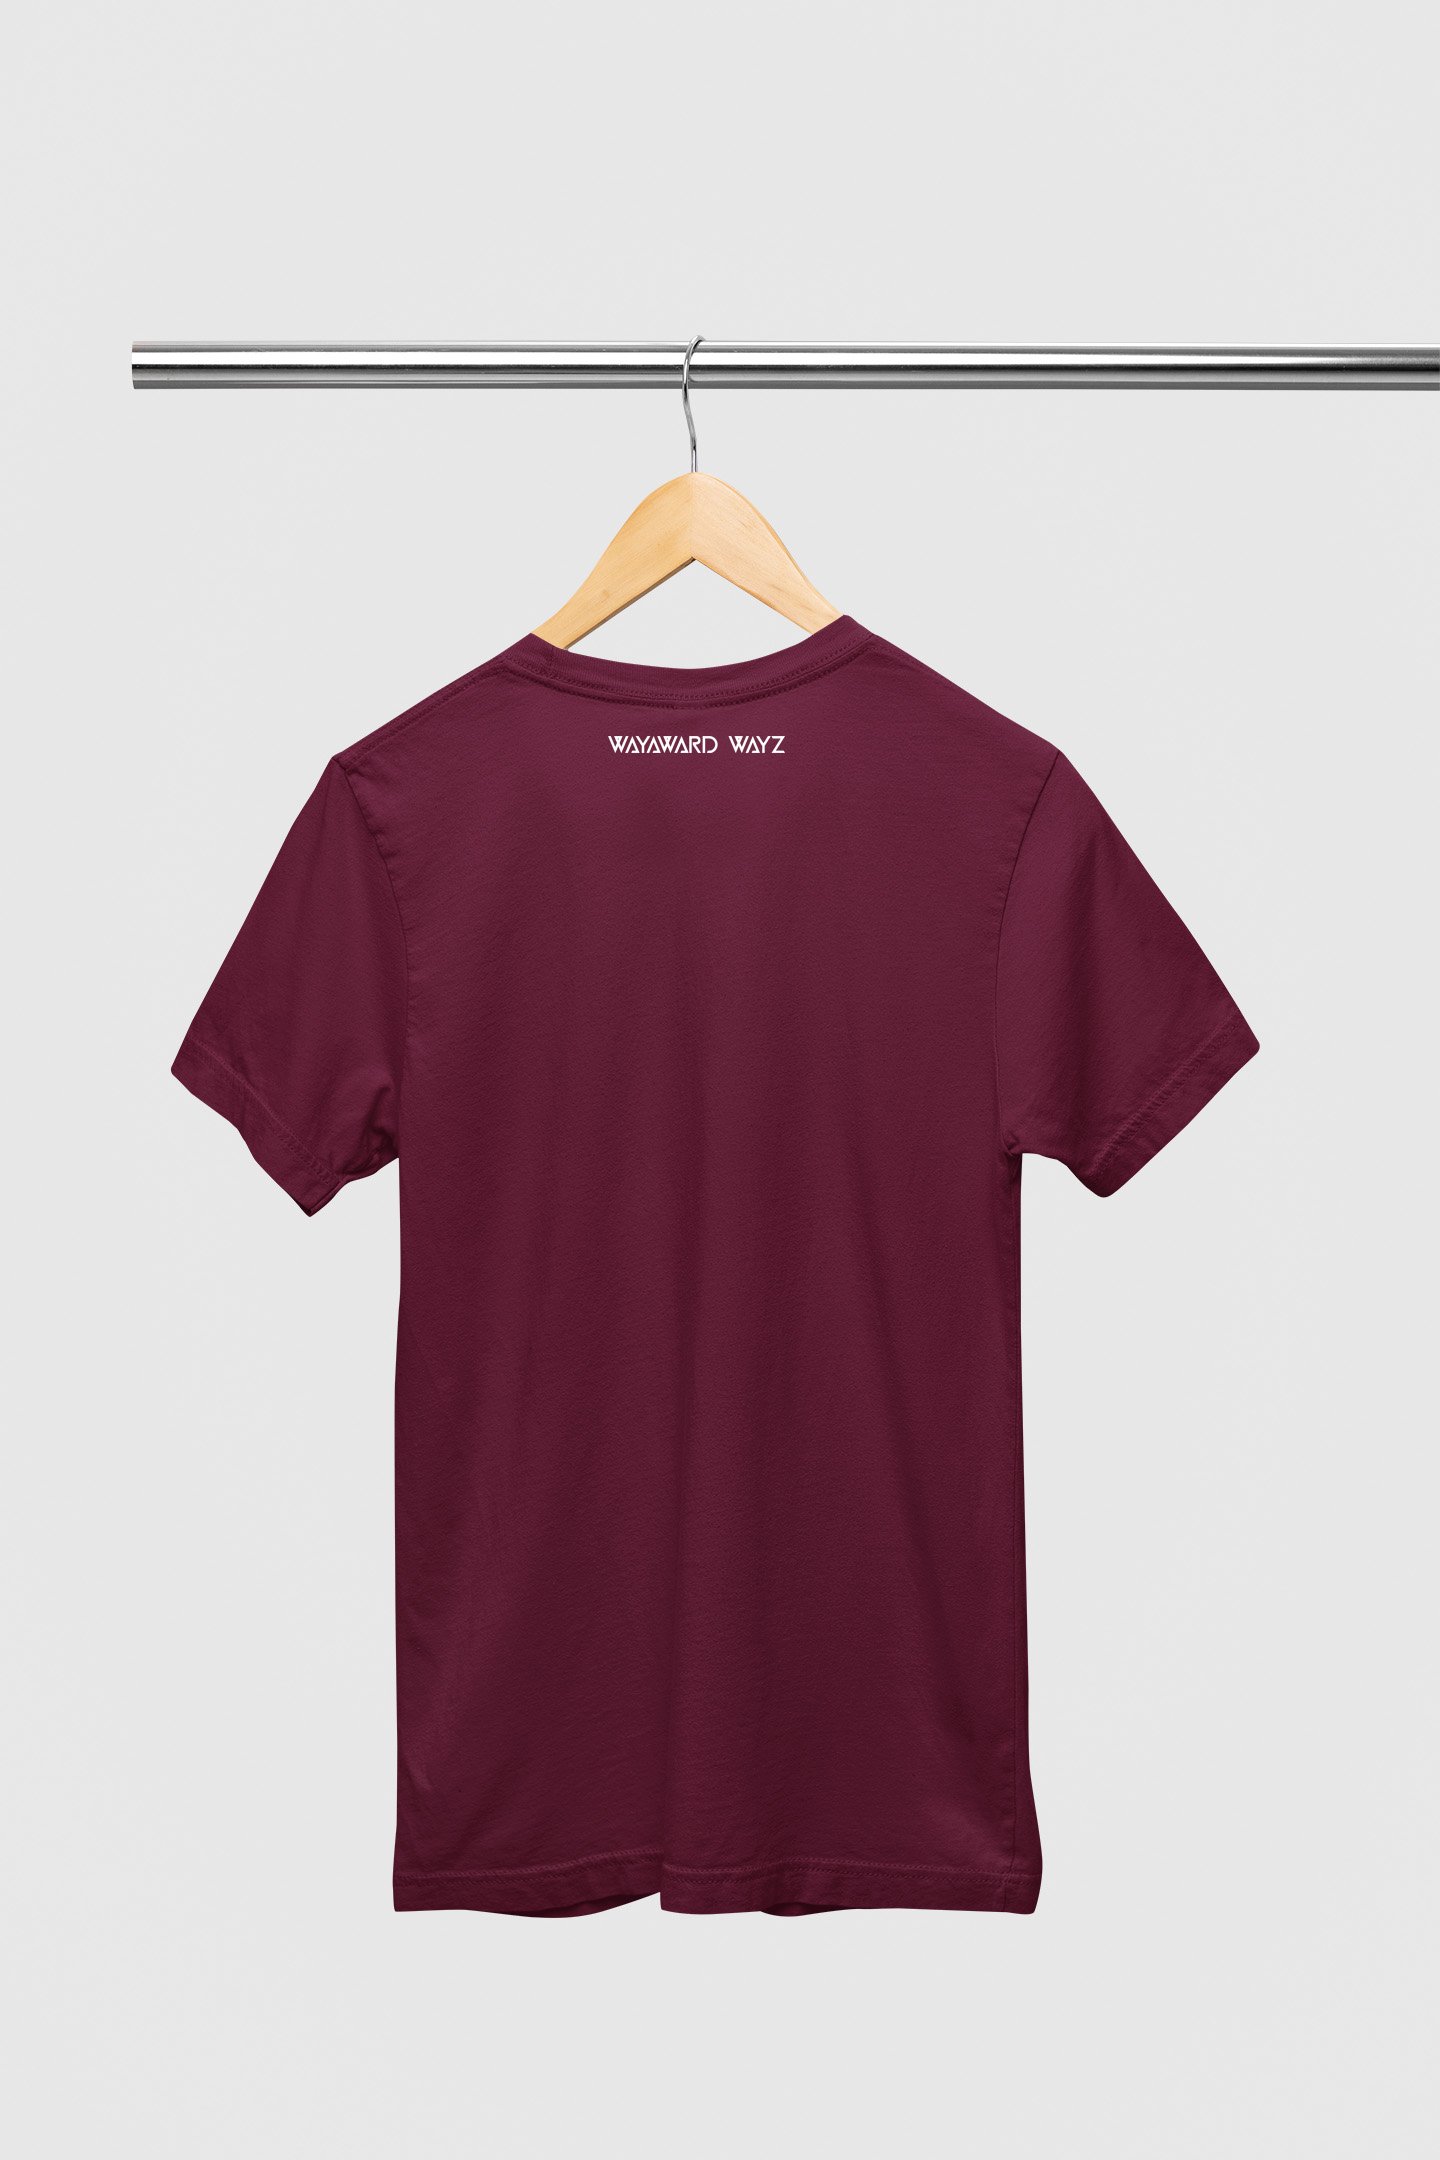 Wine T-Shirt by Wayward Wayz Back